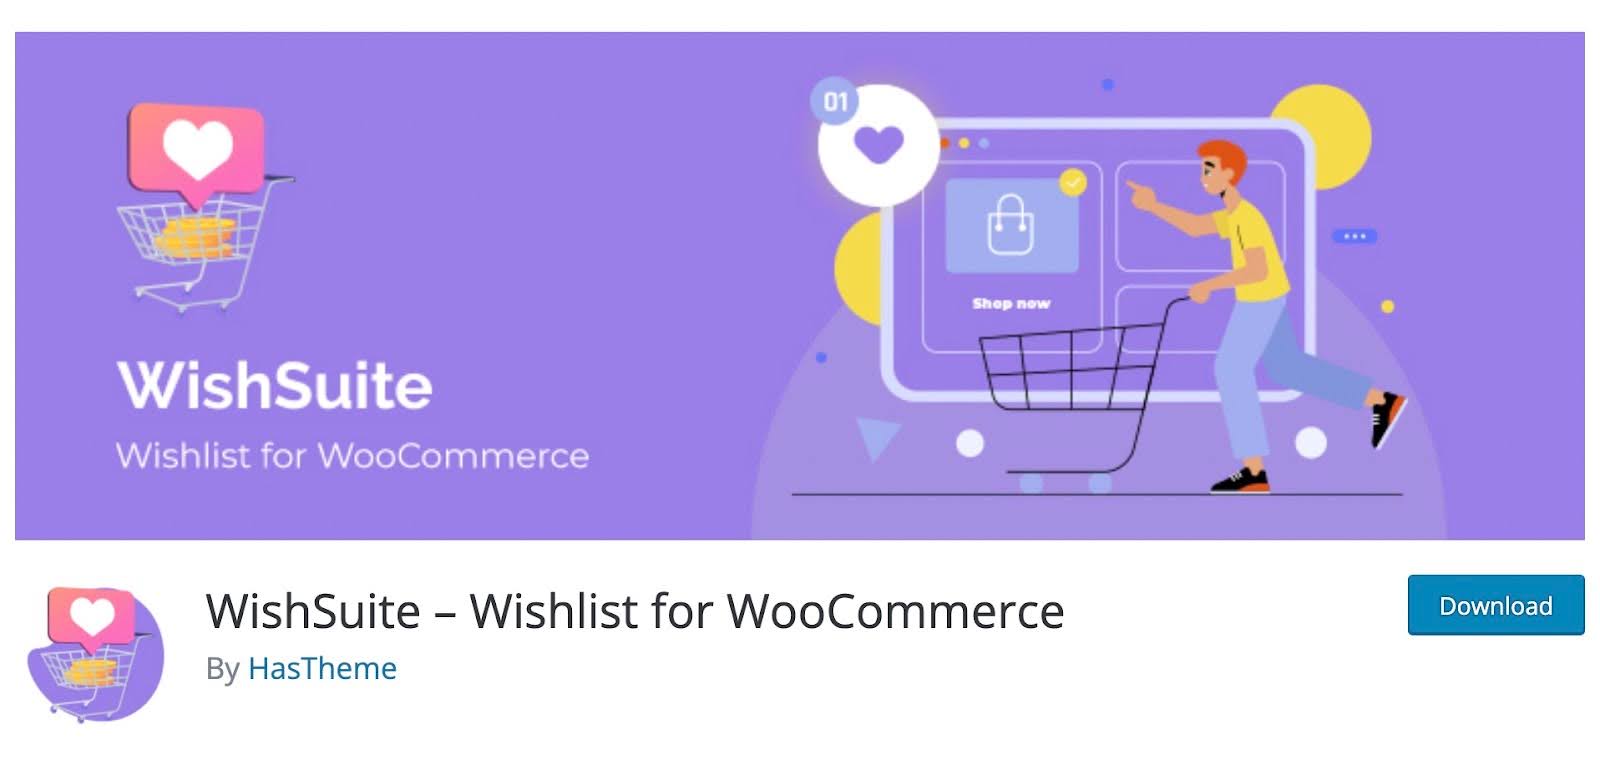 5 WishSuite Wishlist for WooCommerce